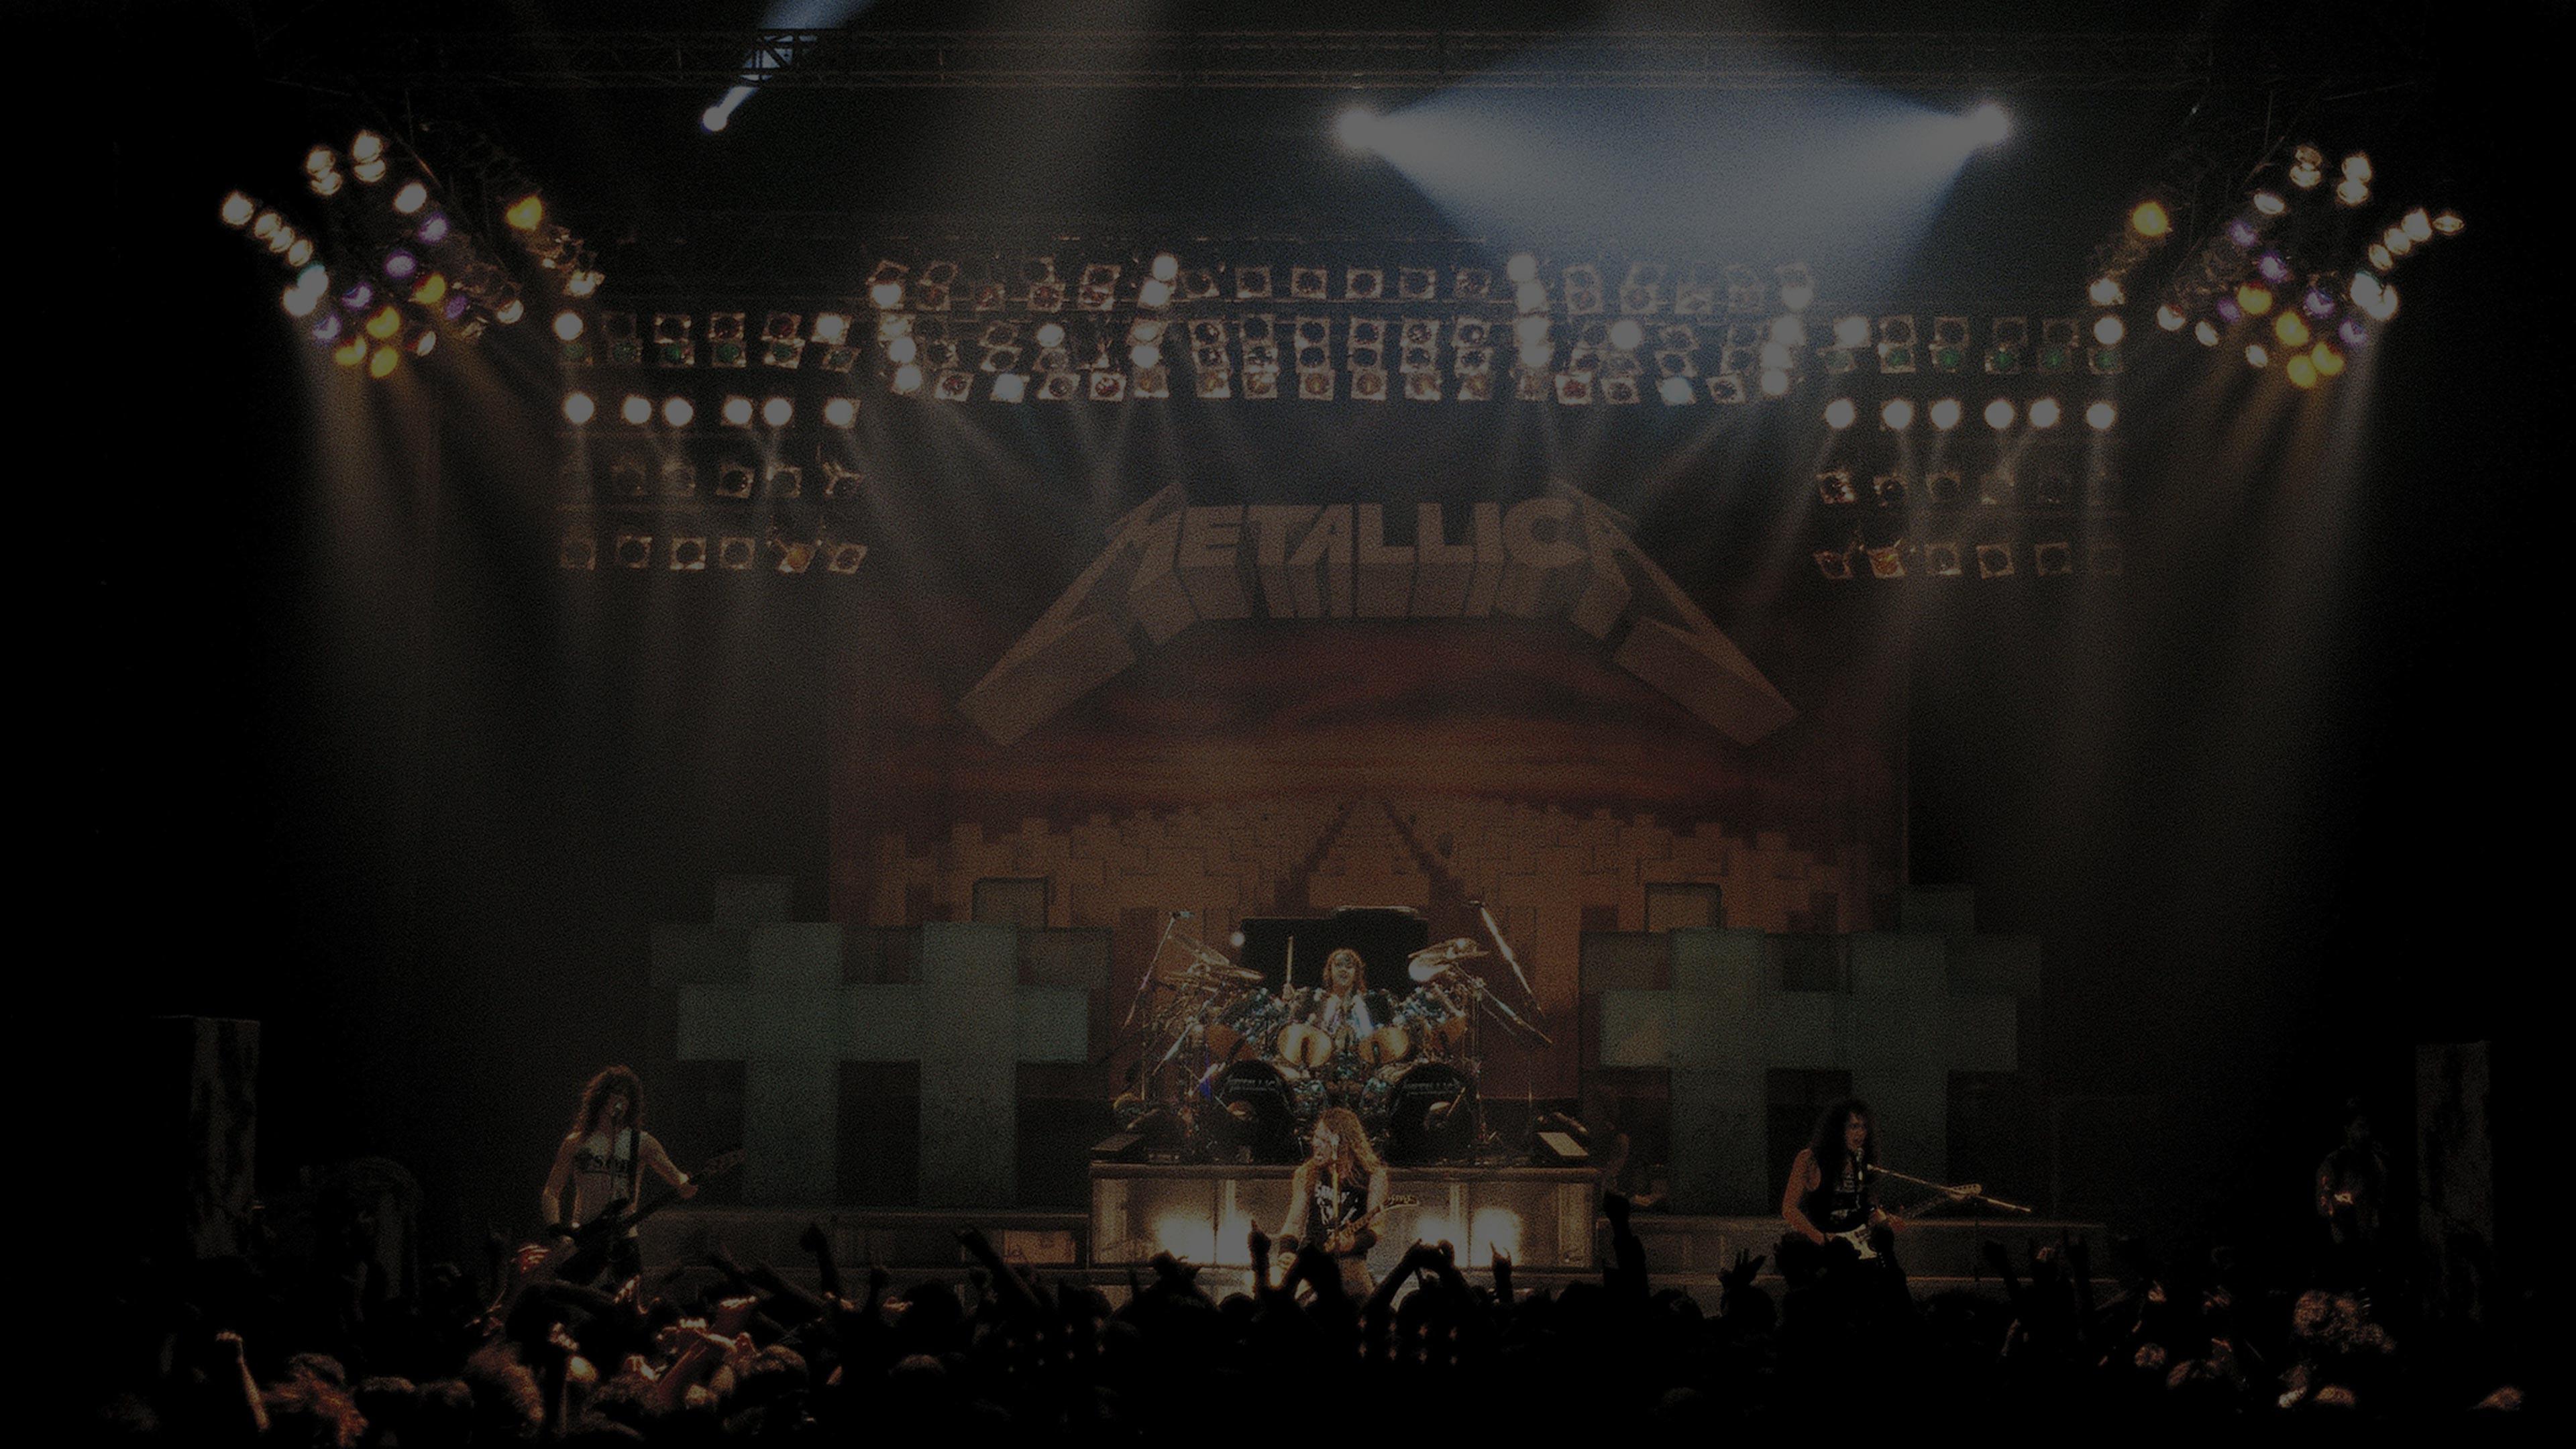 Metallica at Reseda Country Club in Reseda, CA on November 8, 1986